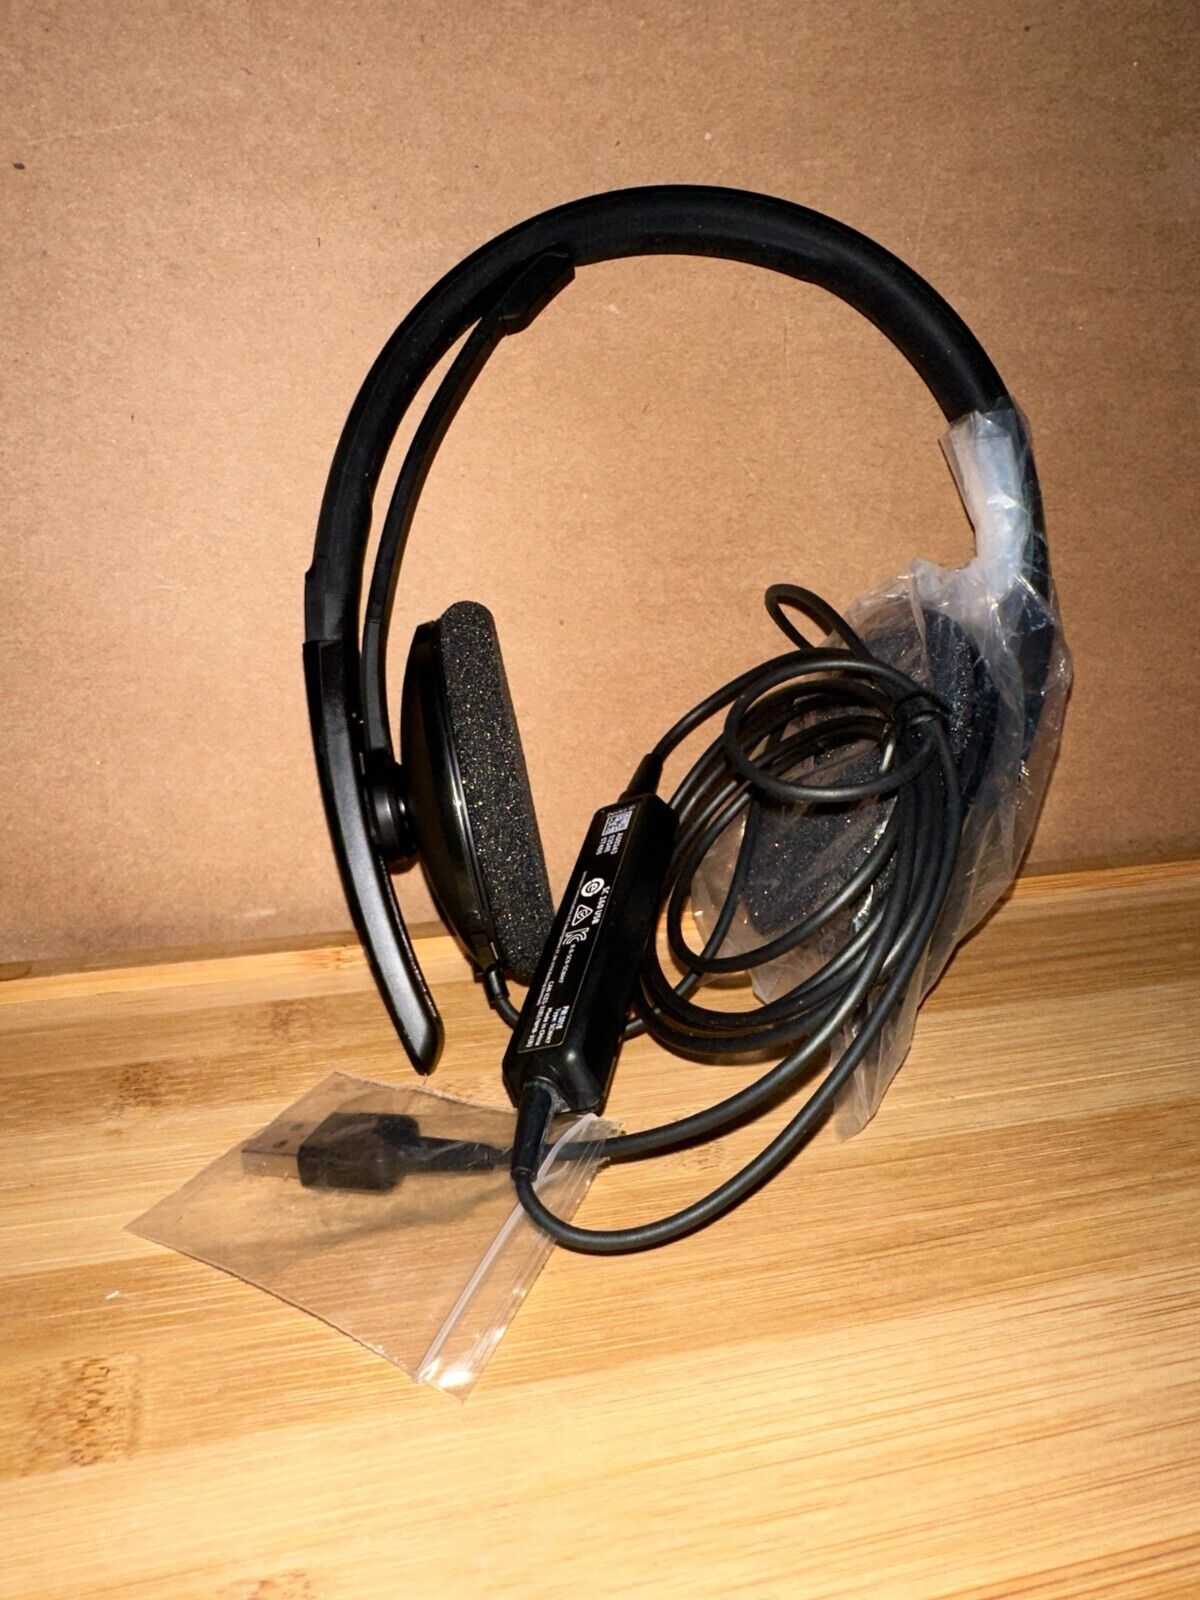 EPOS Sennheiser Double-Sided Headset Never Used {FREE SHIPPING}